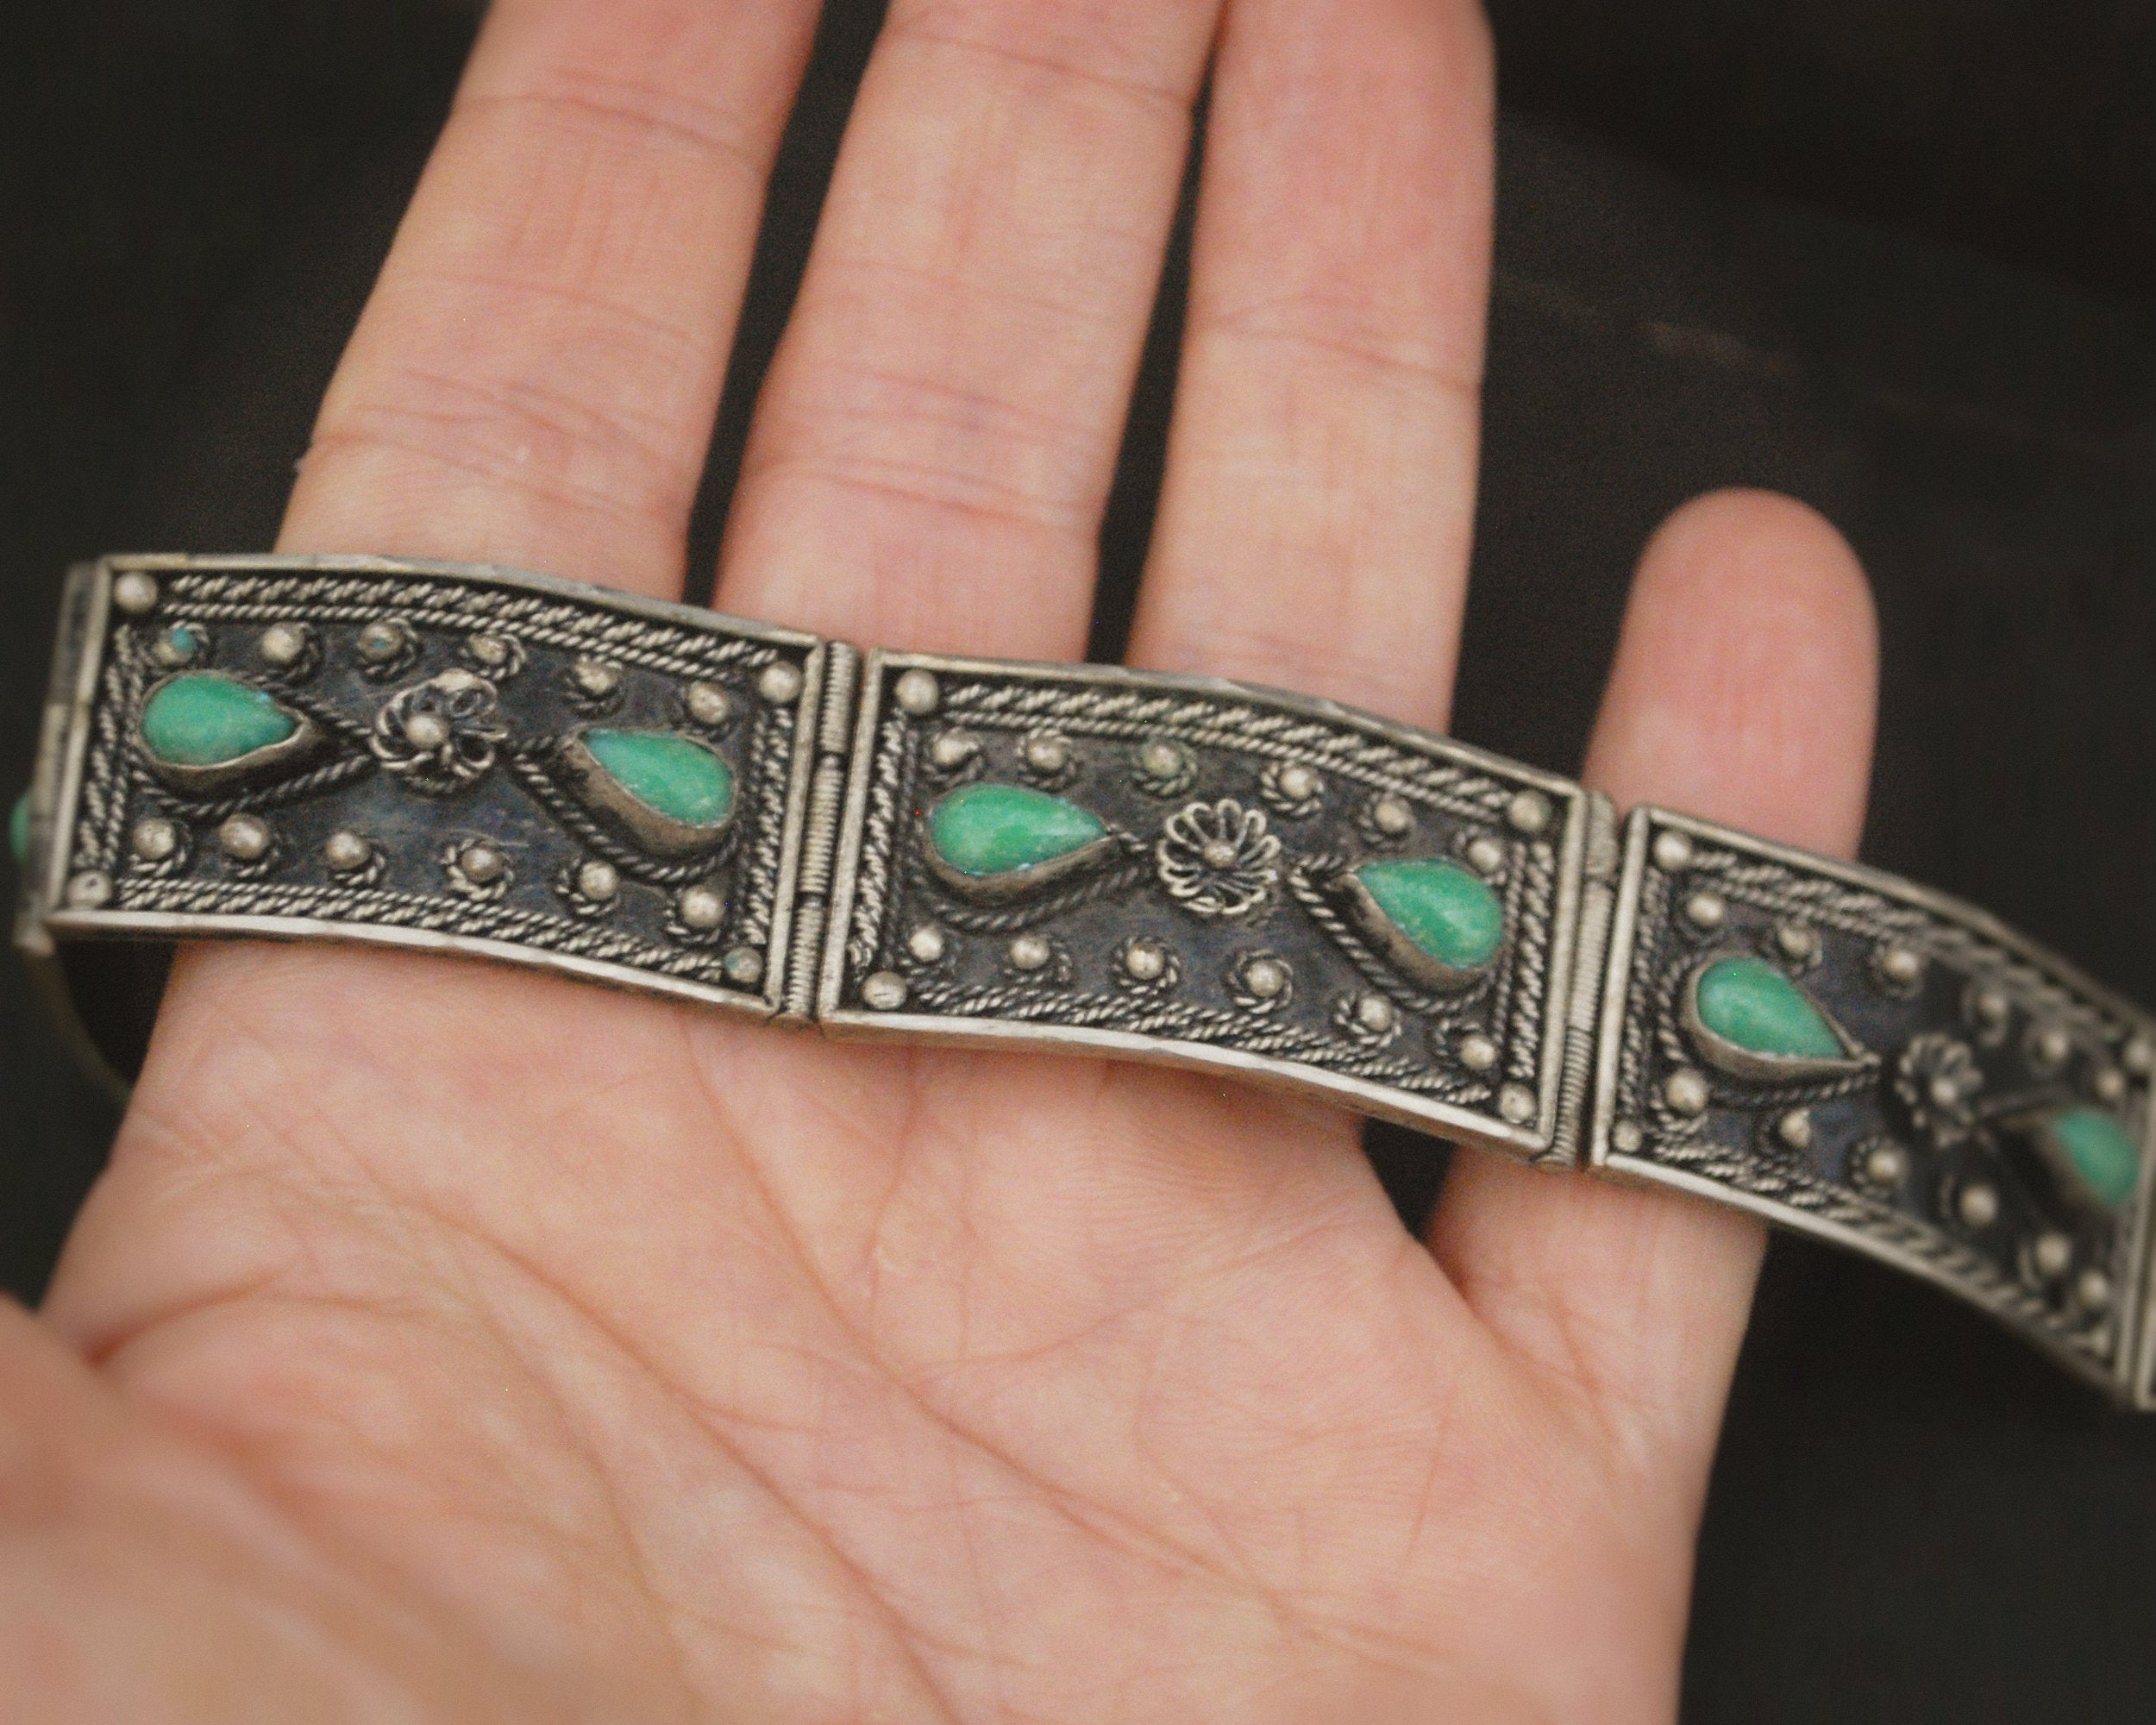 Ethnic Filigree Link Bracelet with Green Stones